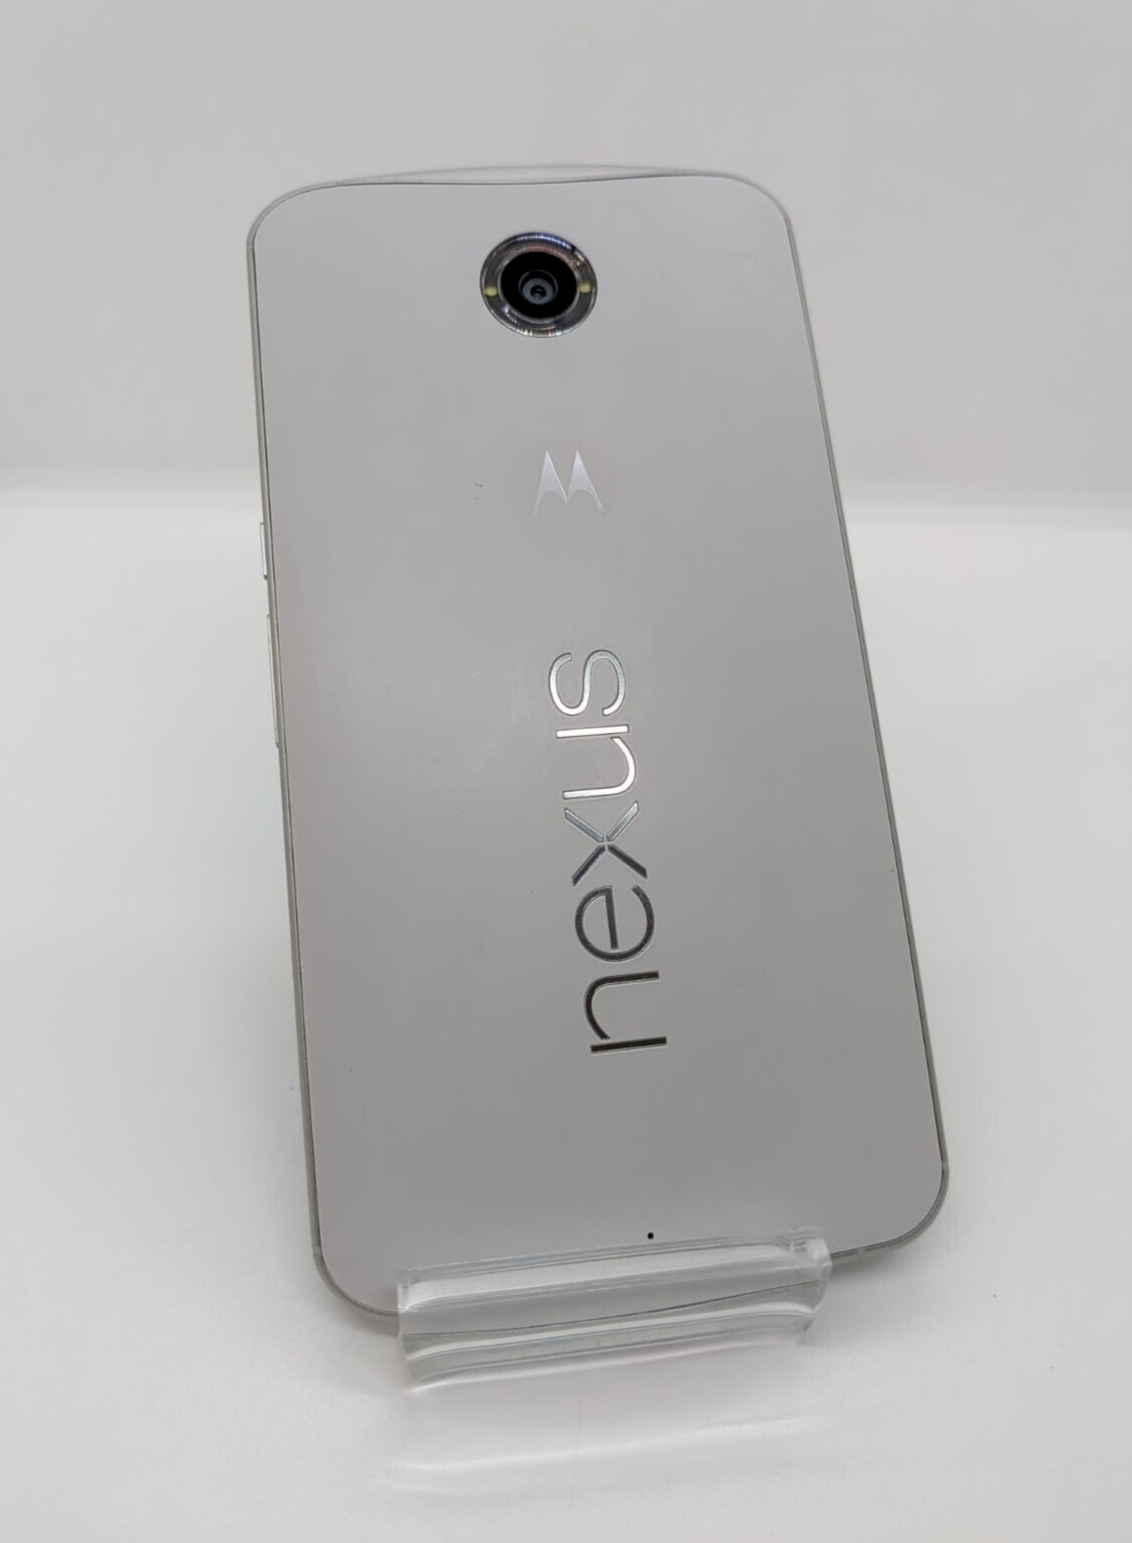 Motorola Nexus 6 64GB Unlocked Smartphone Rooted SuperSU Unlocked Bootloader